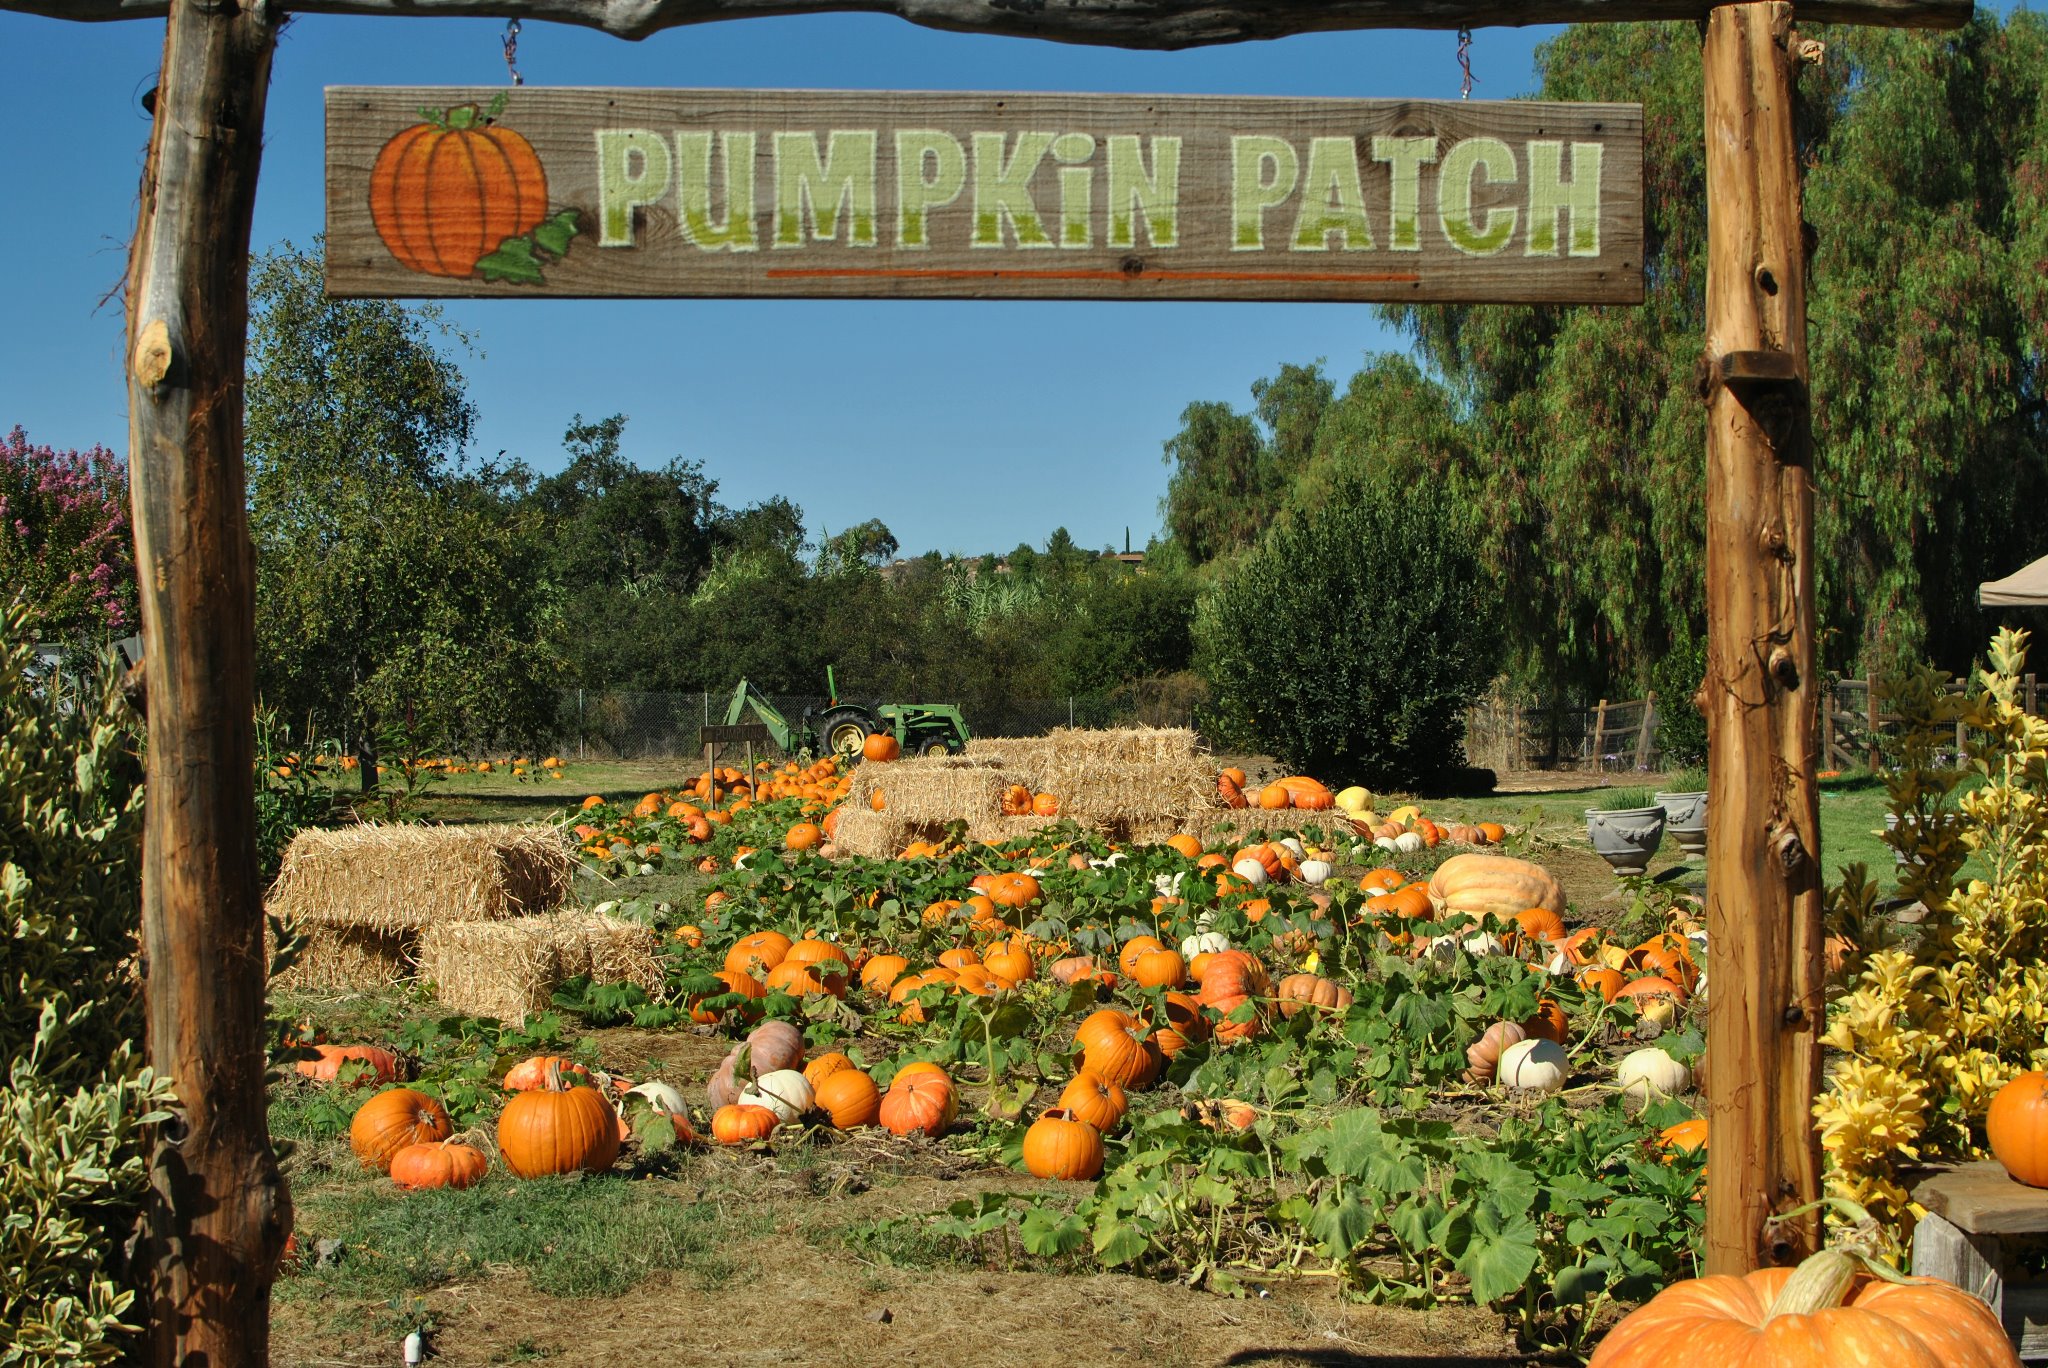 Pumpkin Patch sign and pumpkins at Summer Farms